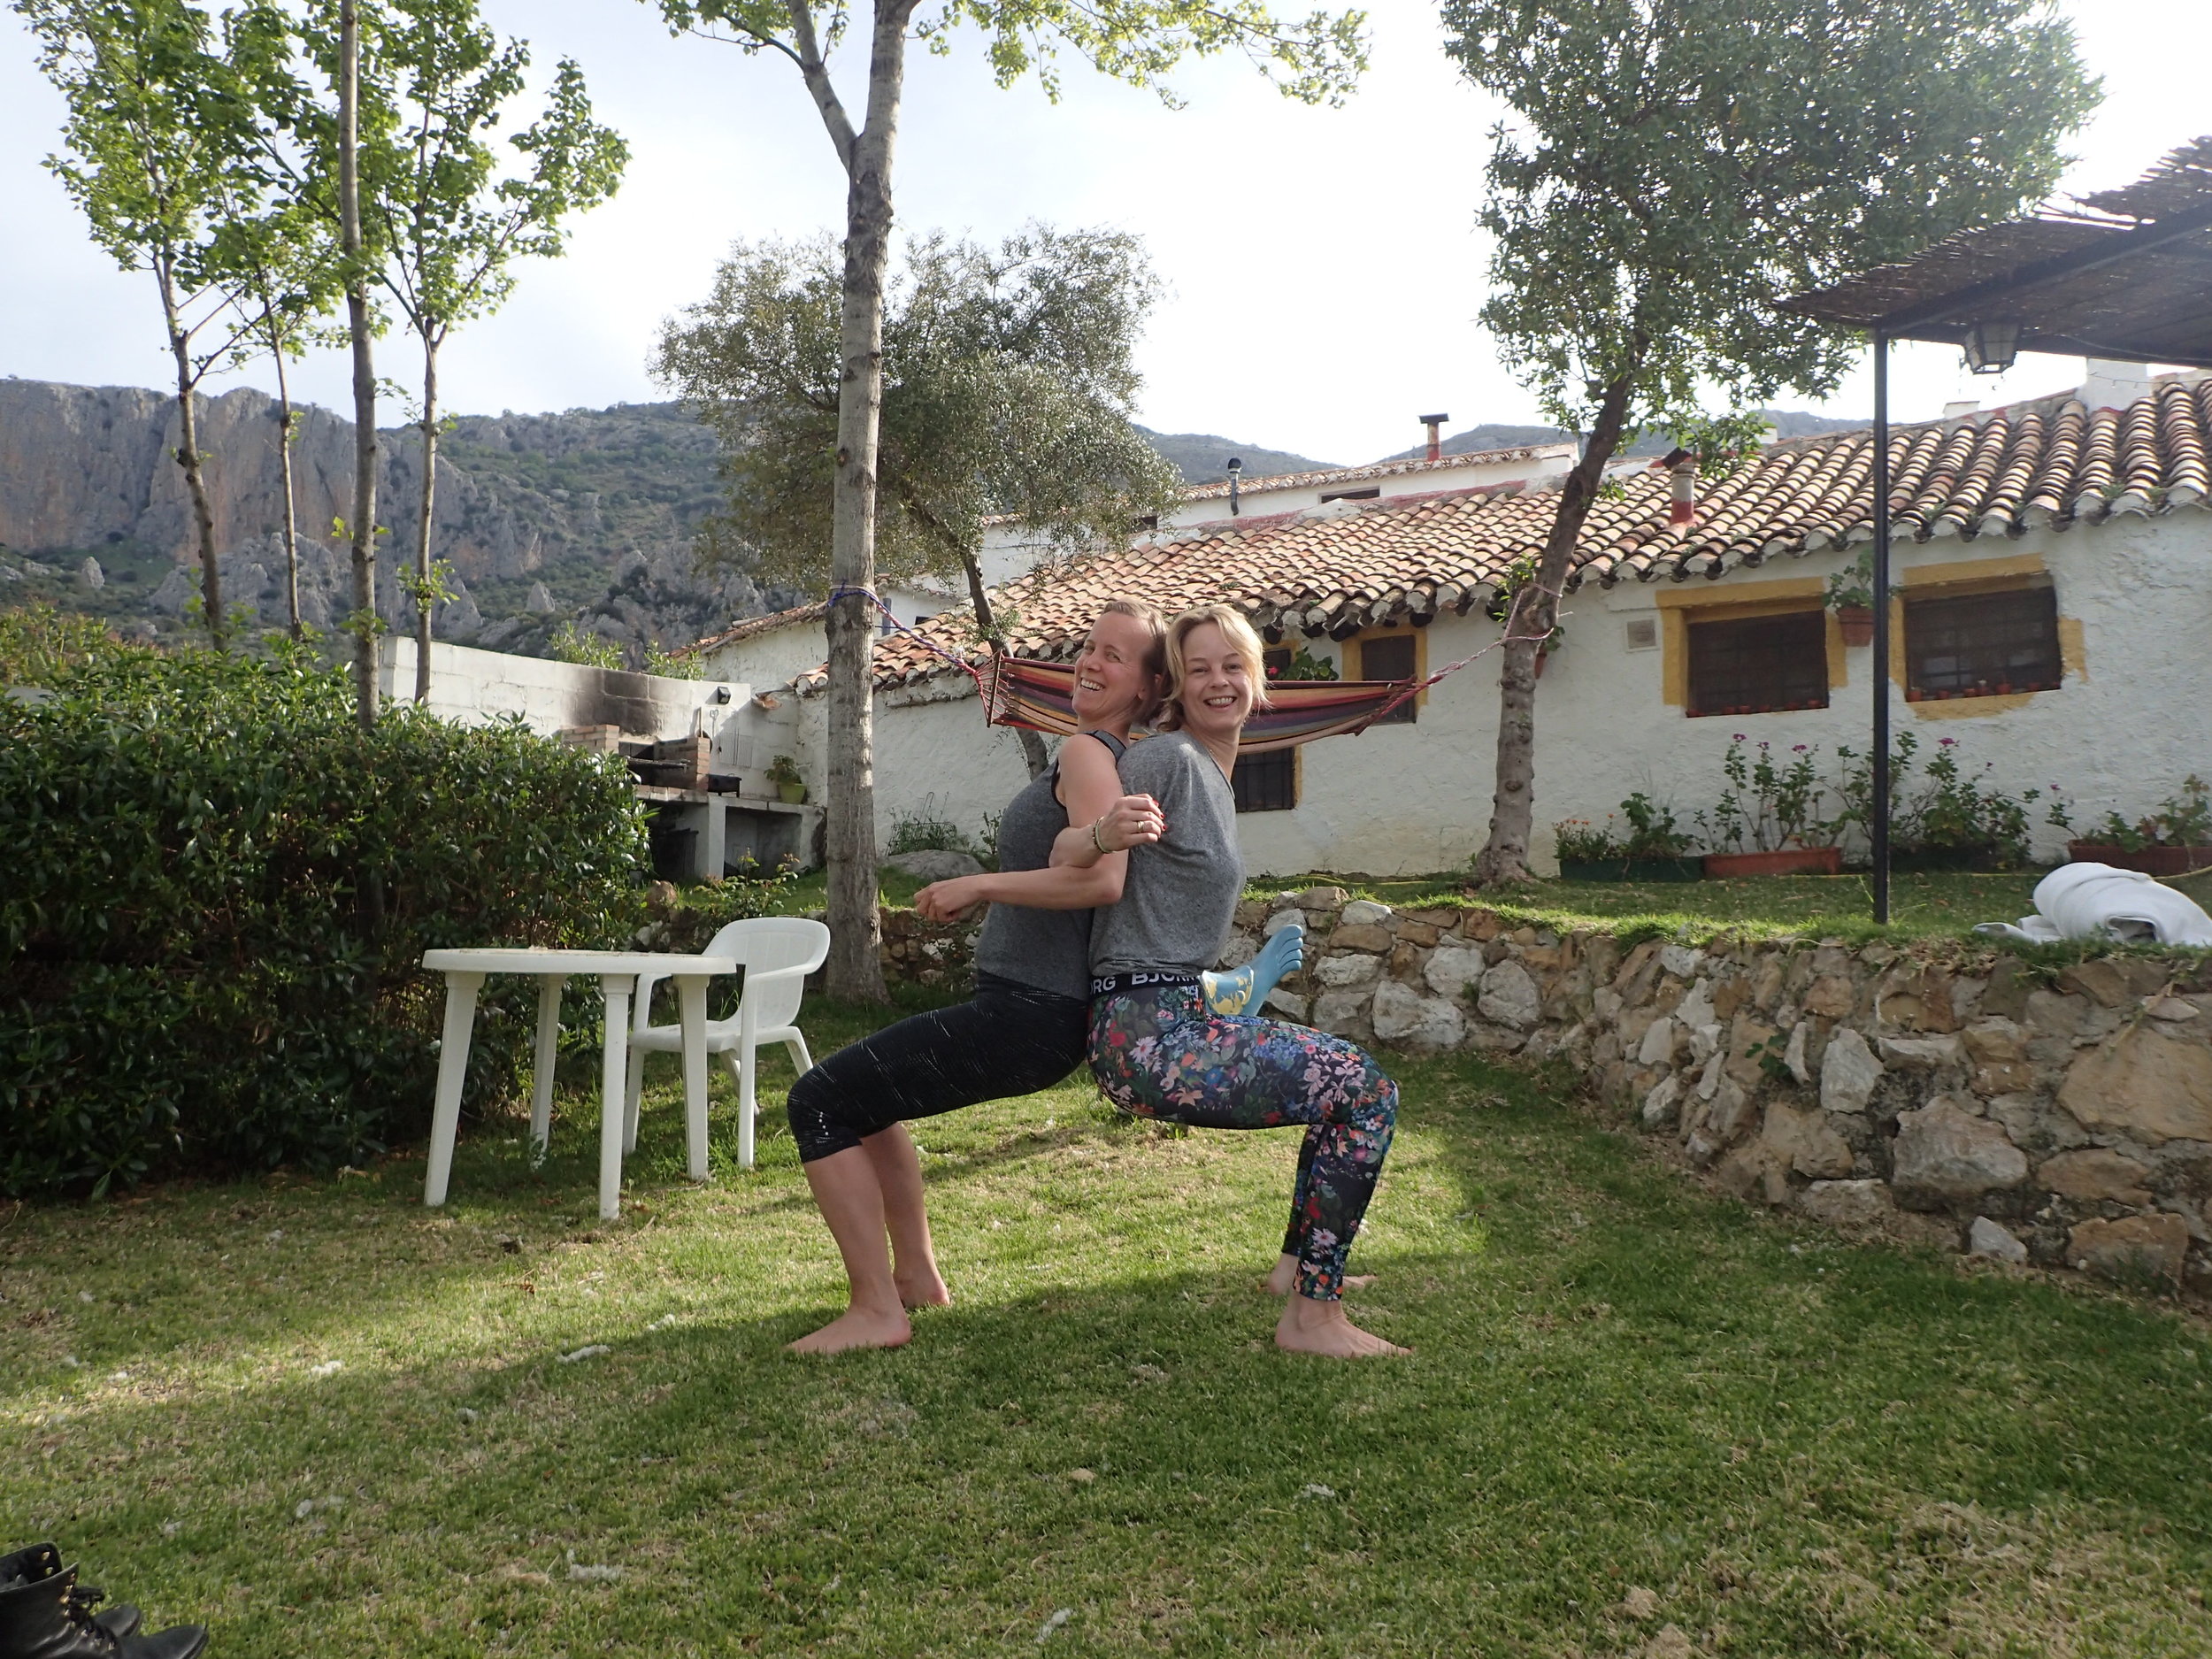 Partner Yoga in garden Yin Yang Yoga retreat Malaga mountains Spain (Copy)